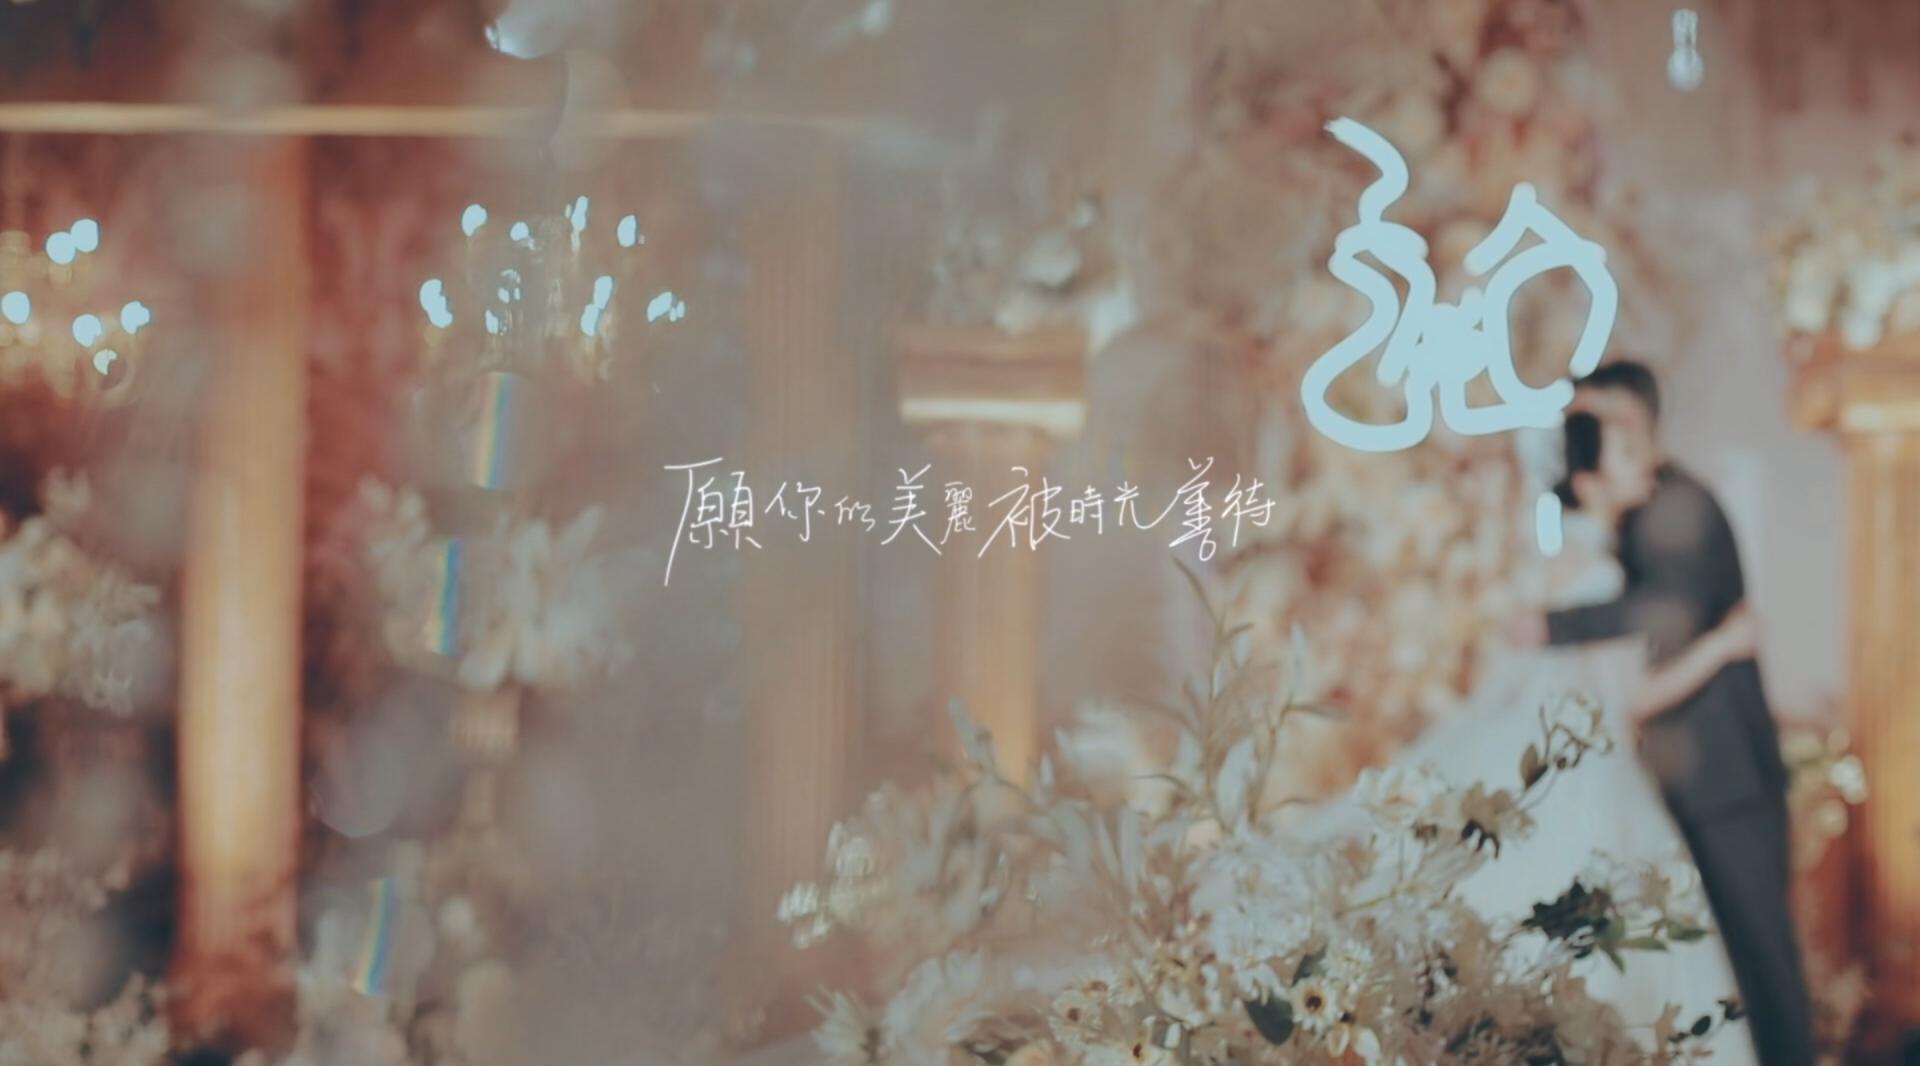 Liu + Li | Aug 8 2020 婚礼短片